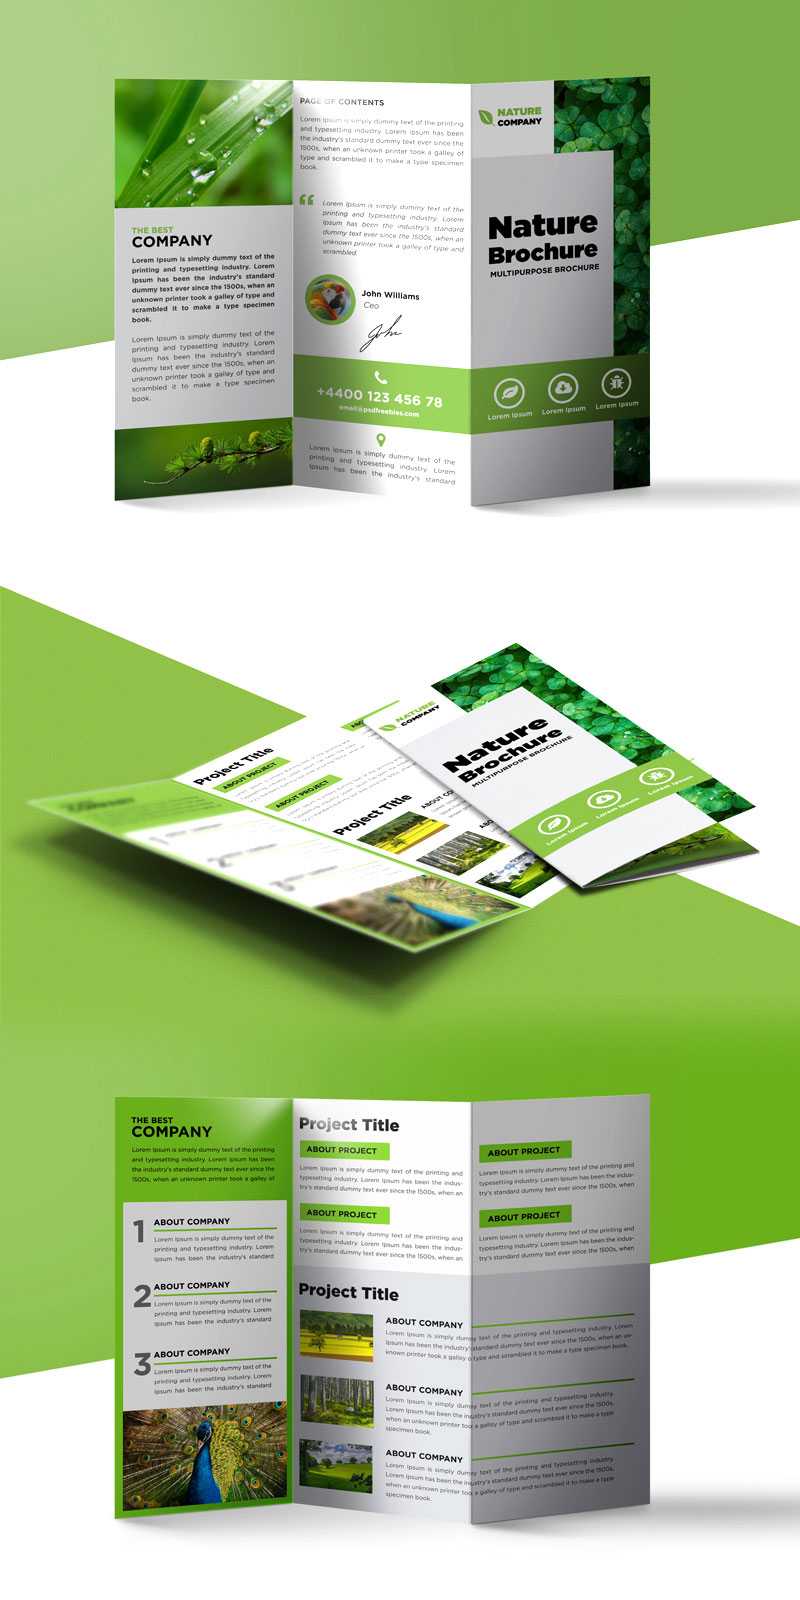 Nature Tri Fold Brochure Template Free Psd | Psdfreebies With Regard To Brochure Psd Template 3 Fold